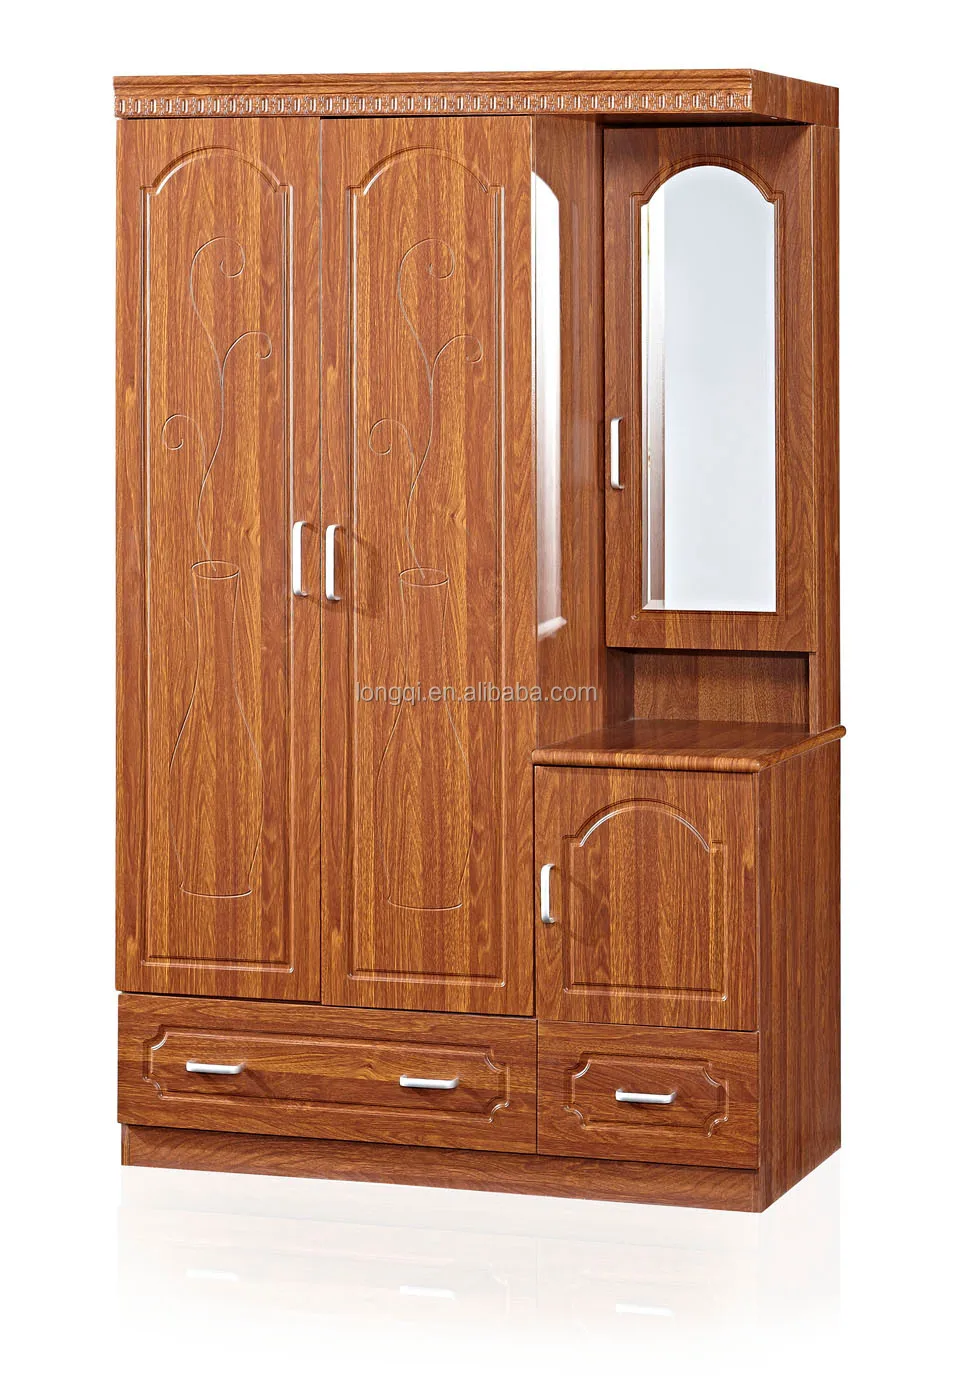 New Arrival Bedroom Mdf Wardrobe Design Wood Clothes Cabinet